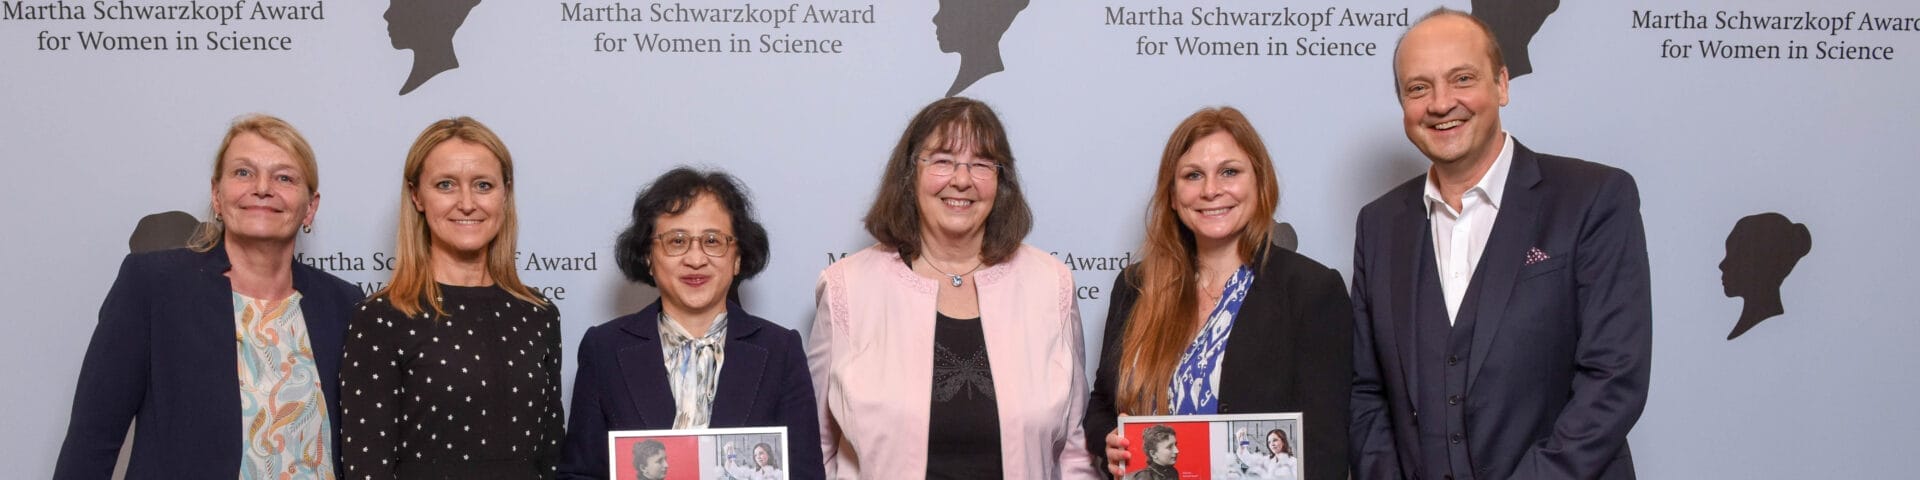 Euro Cosmetics - Martha Schwarzkopf Award for Women in Science